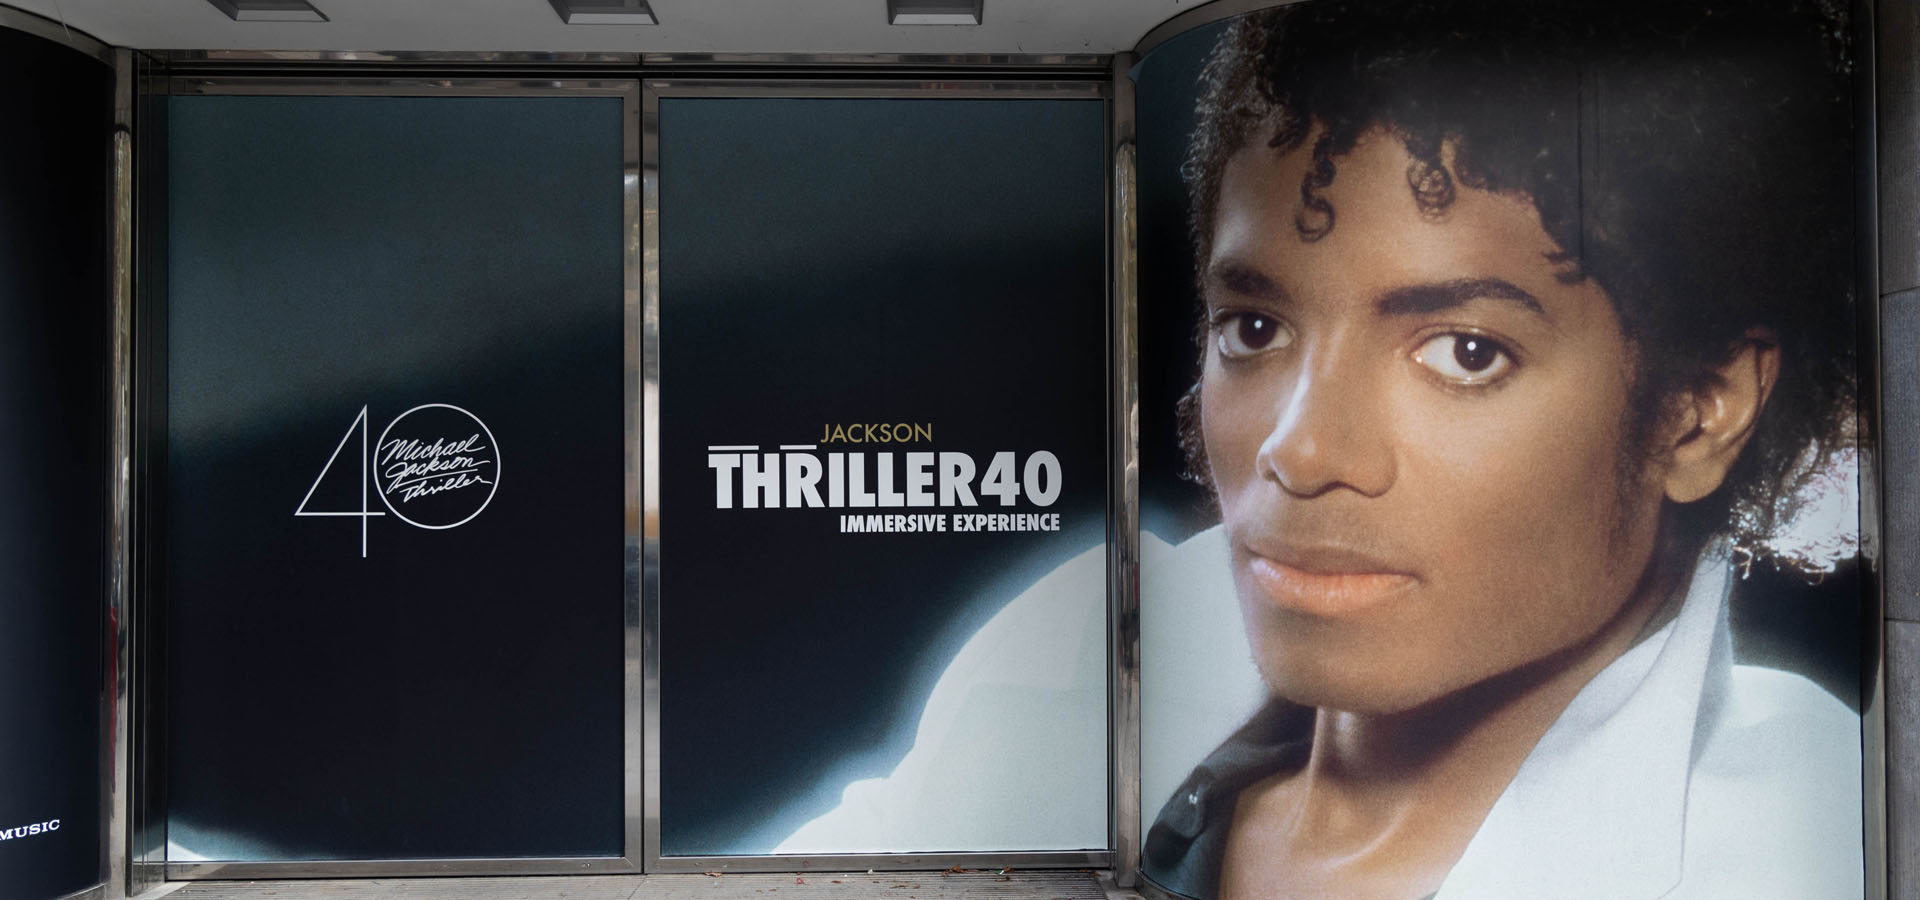 Michael Jackson Thriller 40 Immersive Experience